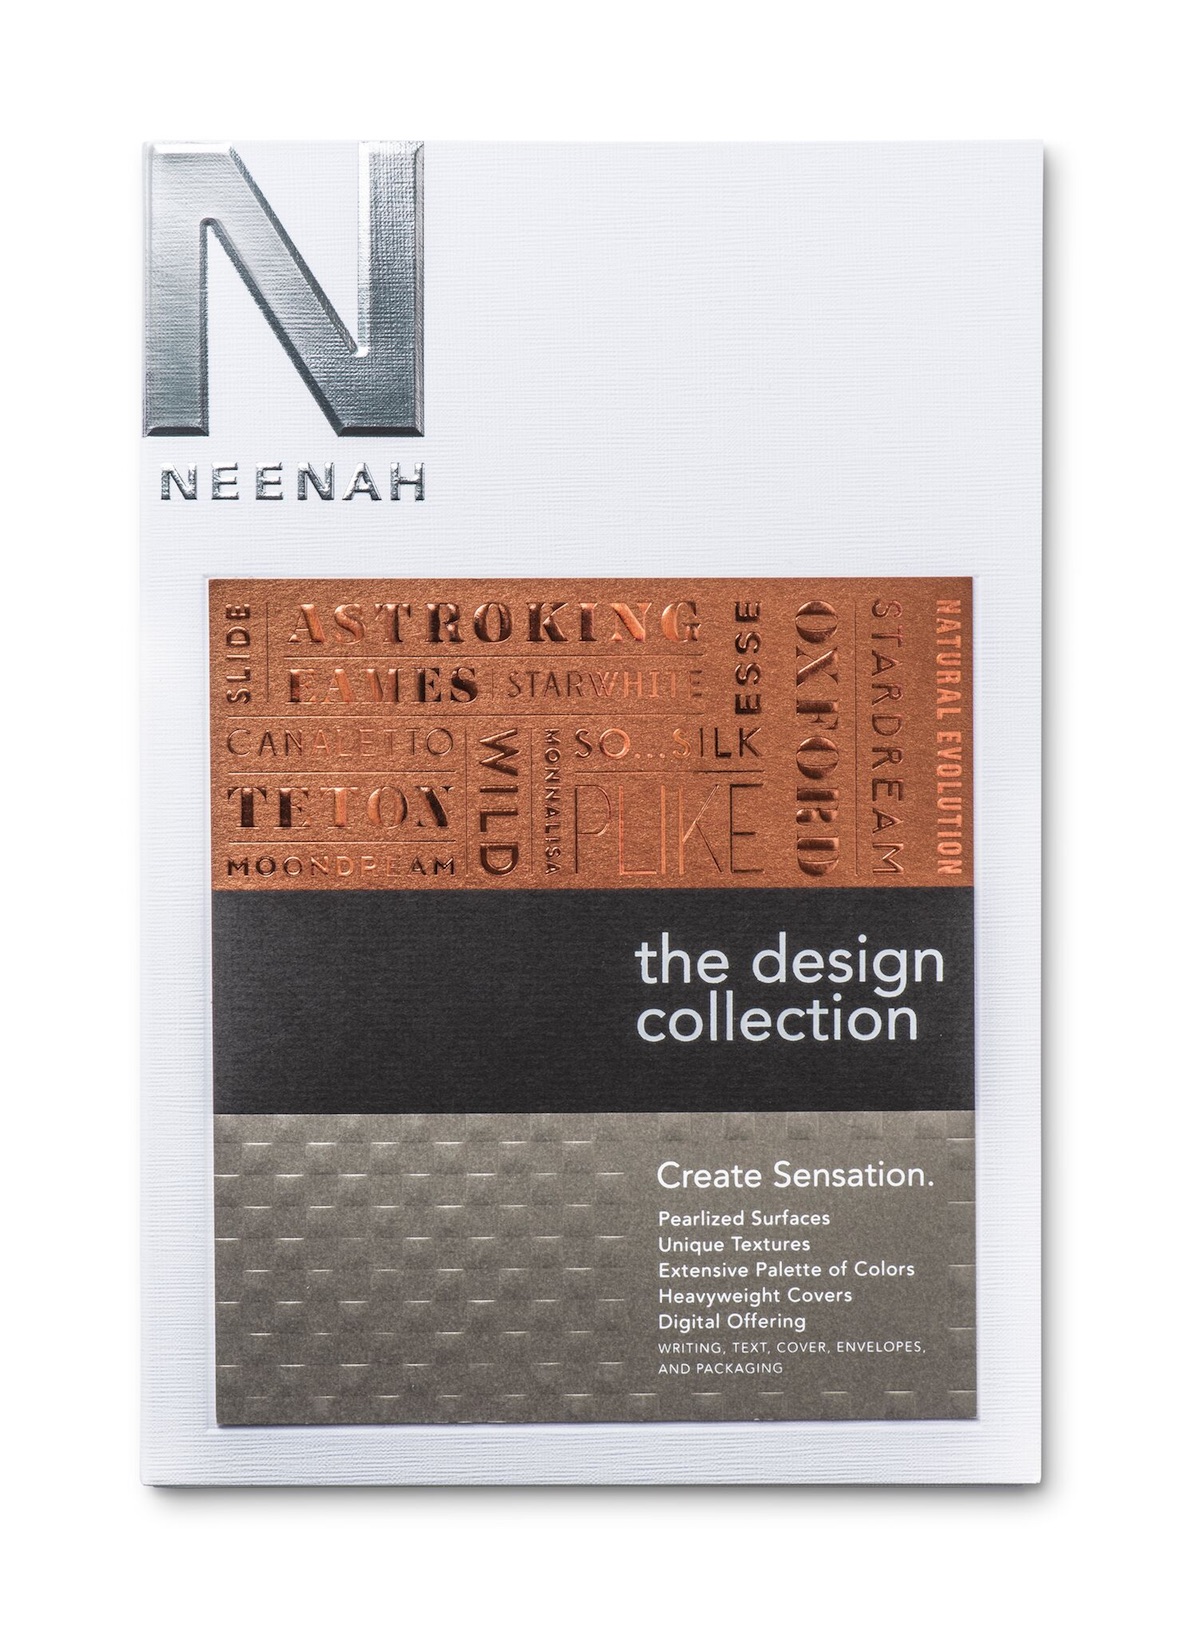 Neenah design collection